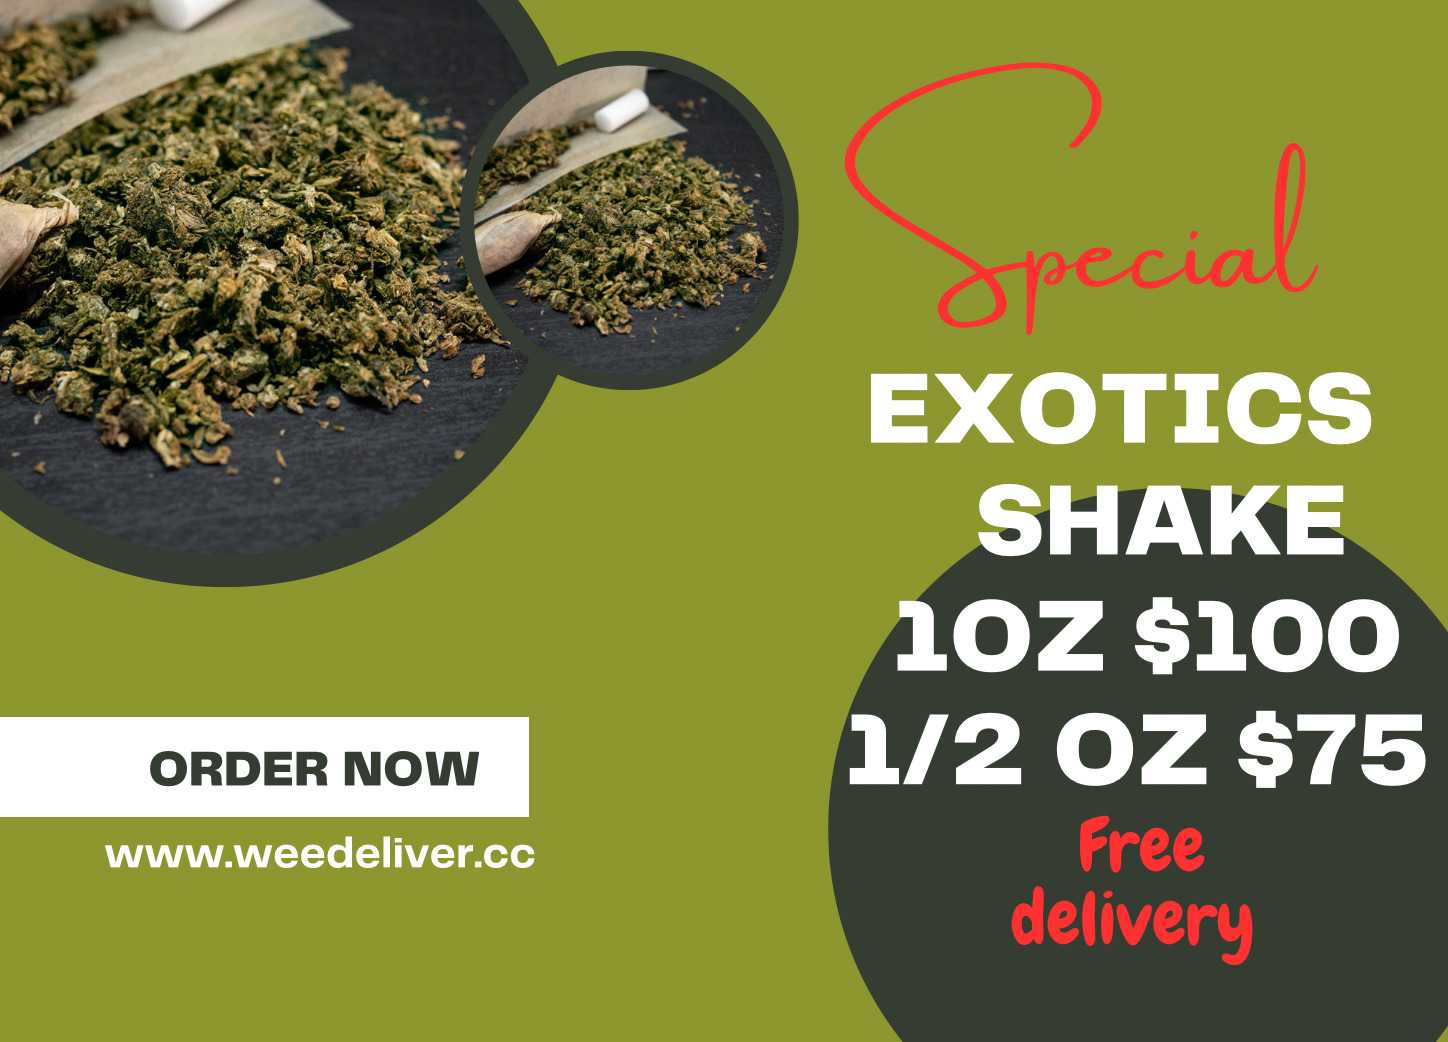 $100 1 Oz and $75 1/2 Oz Exotic Shake